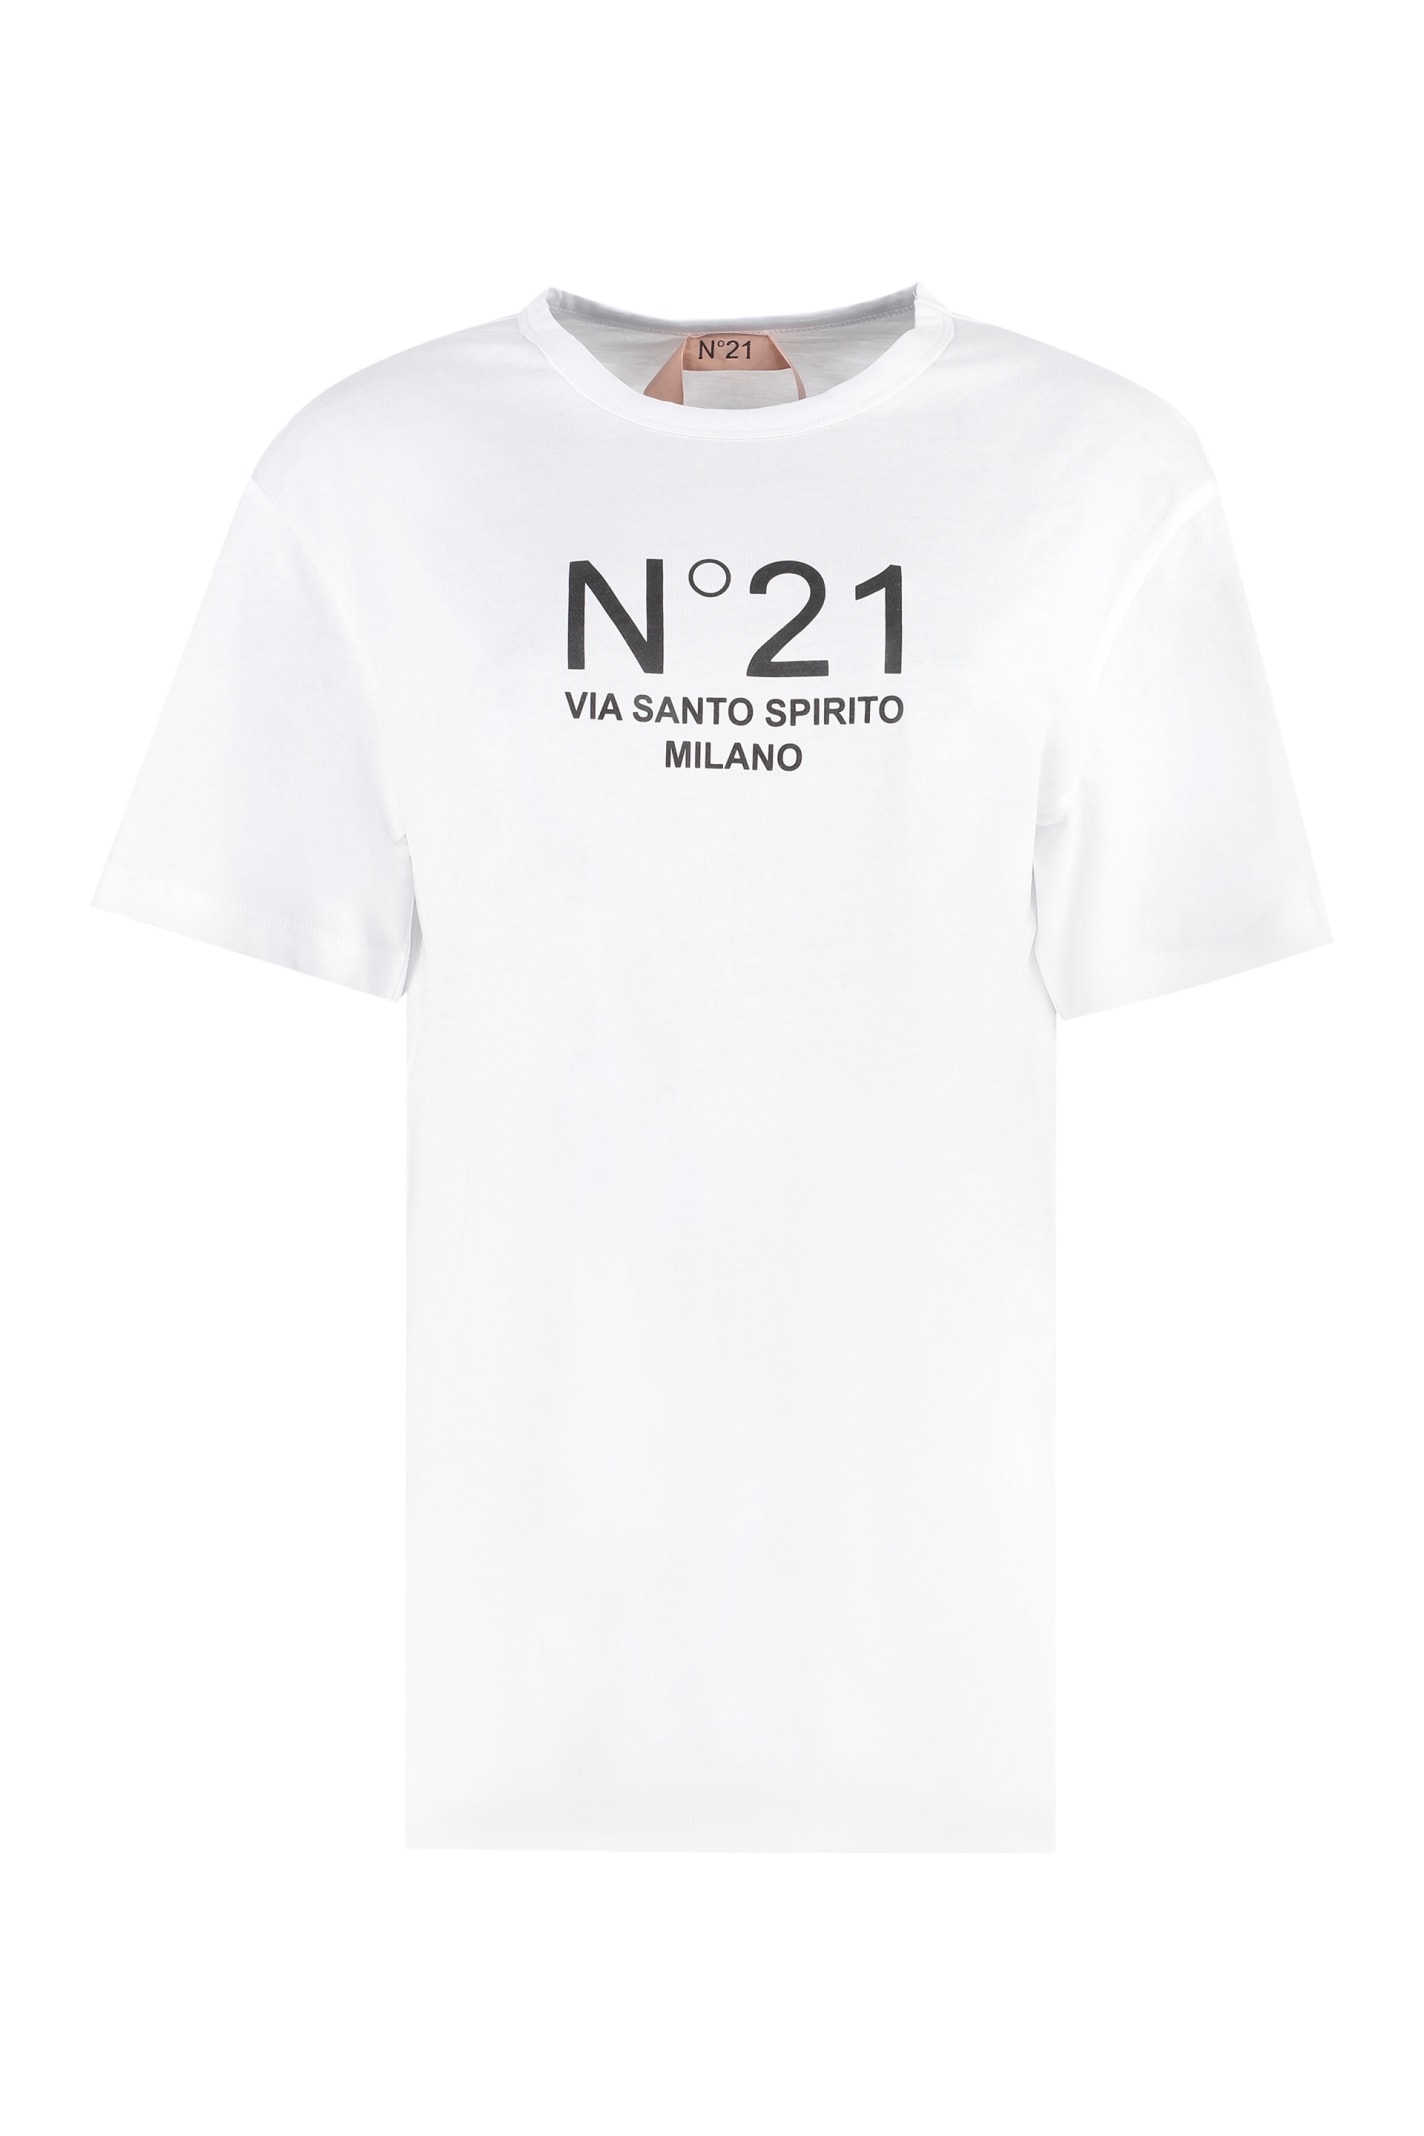 N.21 Printed Cotton T-shirt